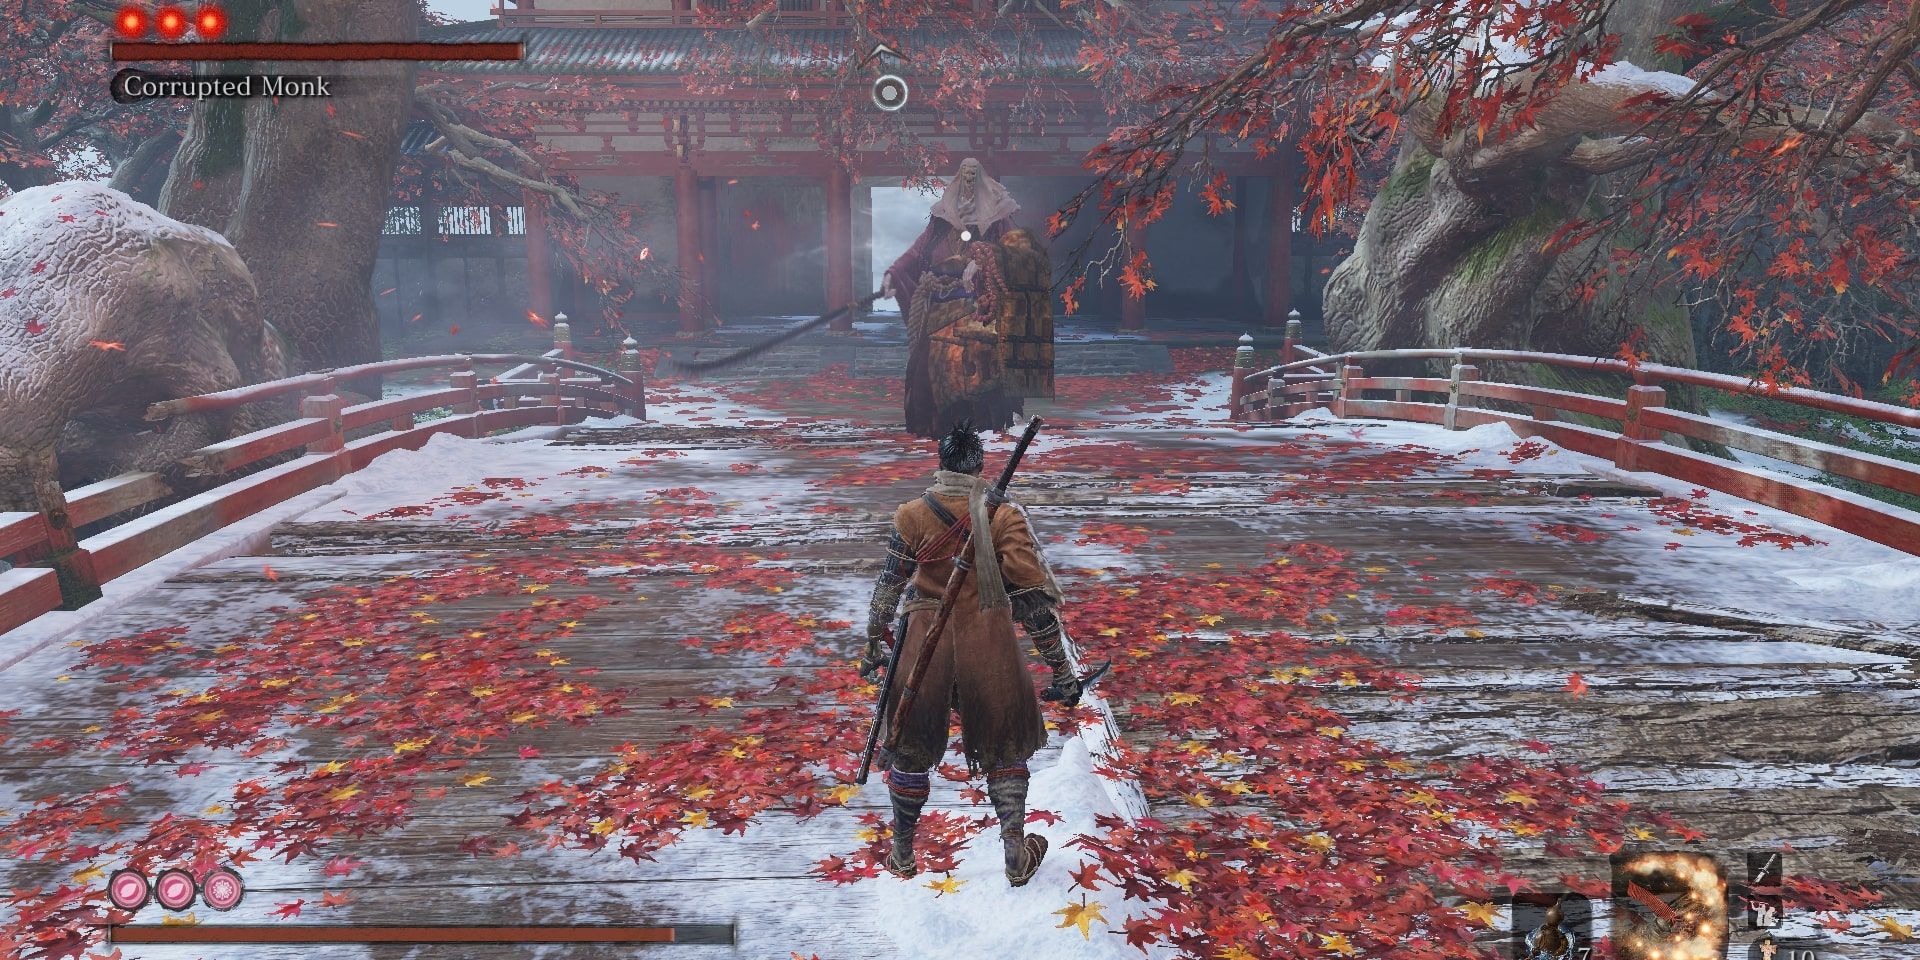 Corrupted Monk Boss Fight from Sekiro